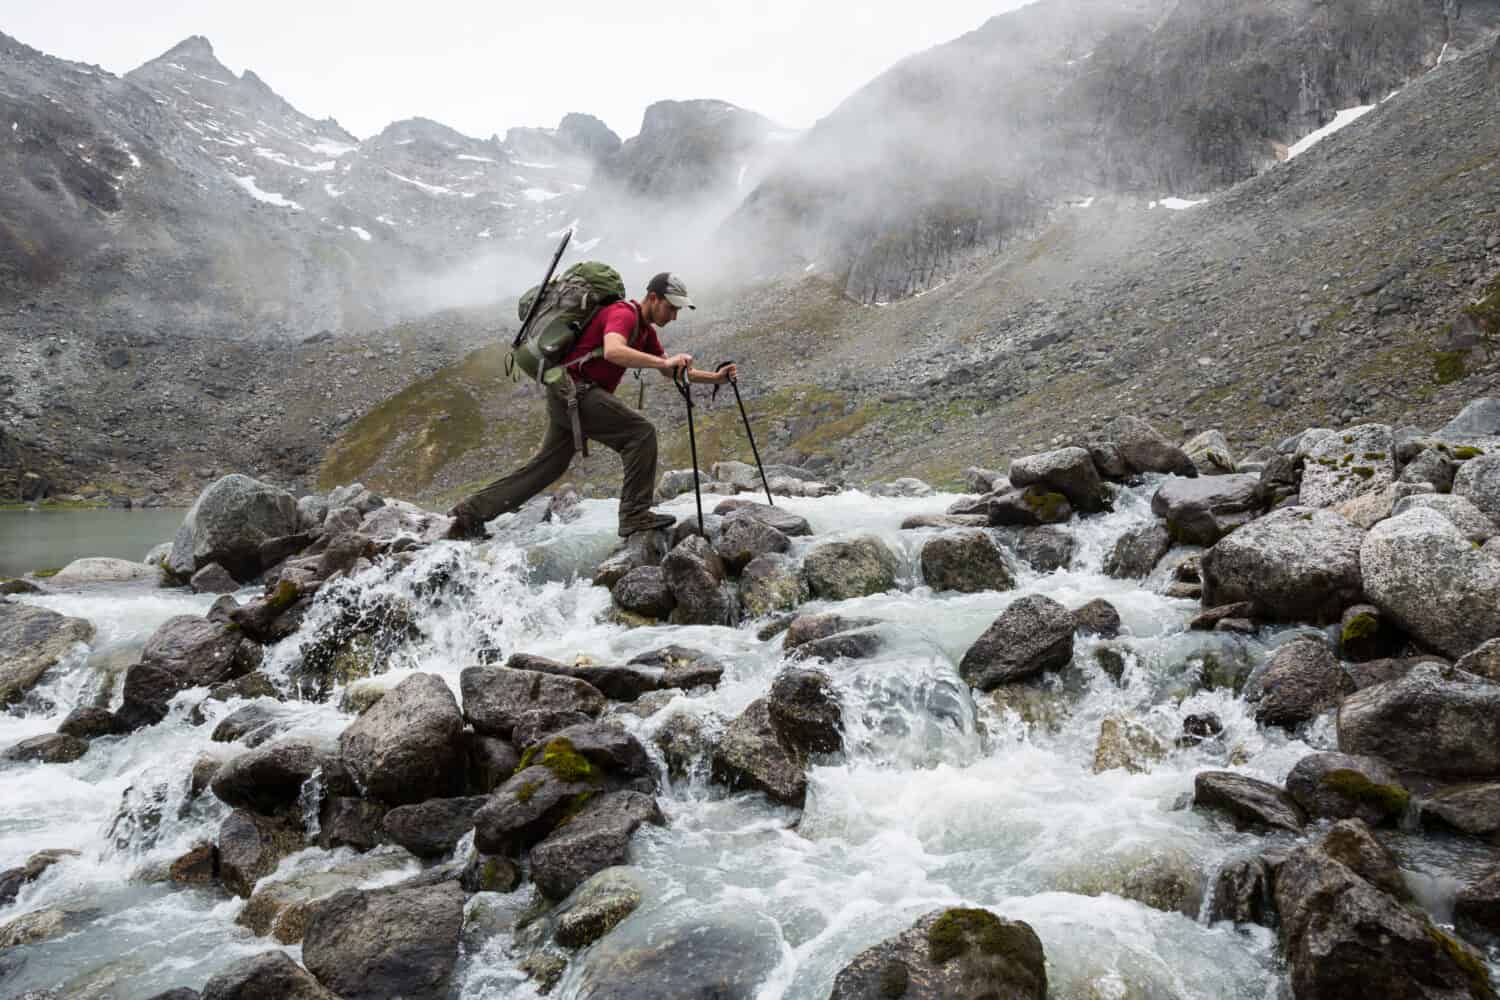 A man steps his way across a rocky river in the Talkeetna wilderness of Alaska